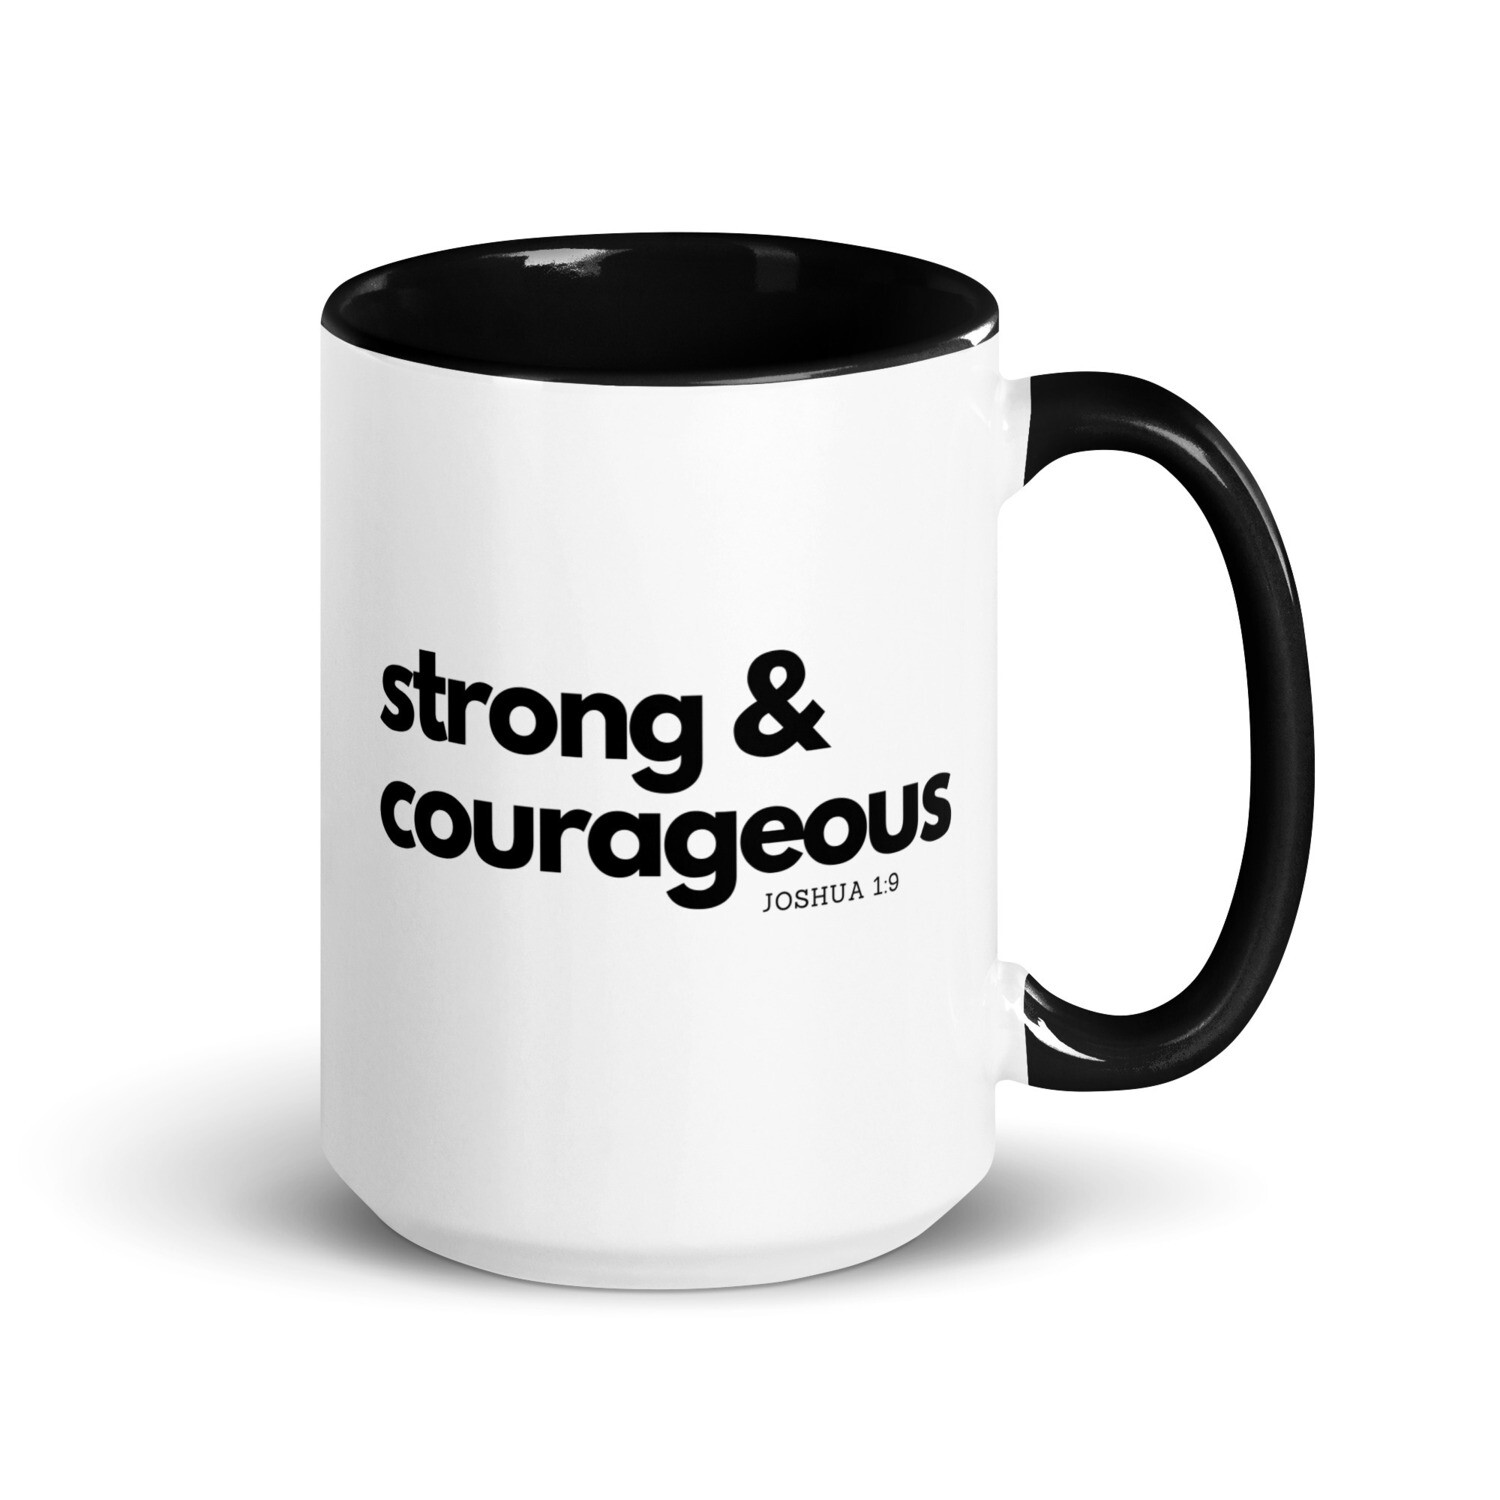 Courage Mug with Color Inside